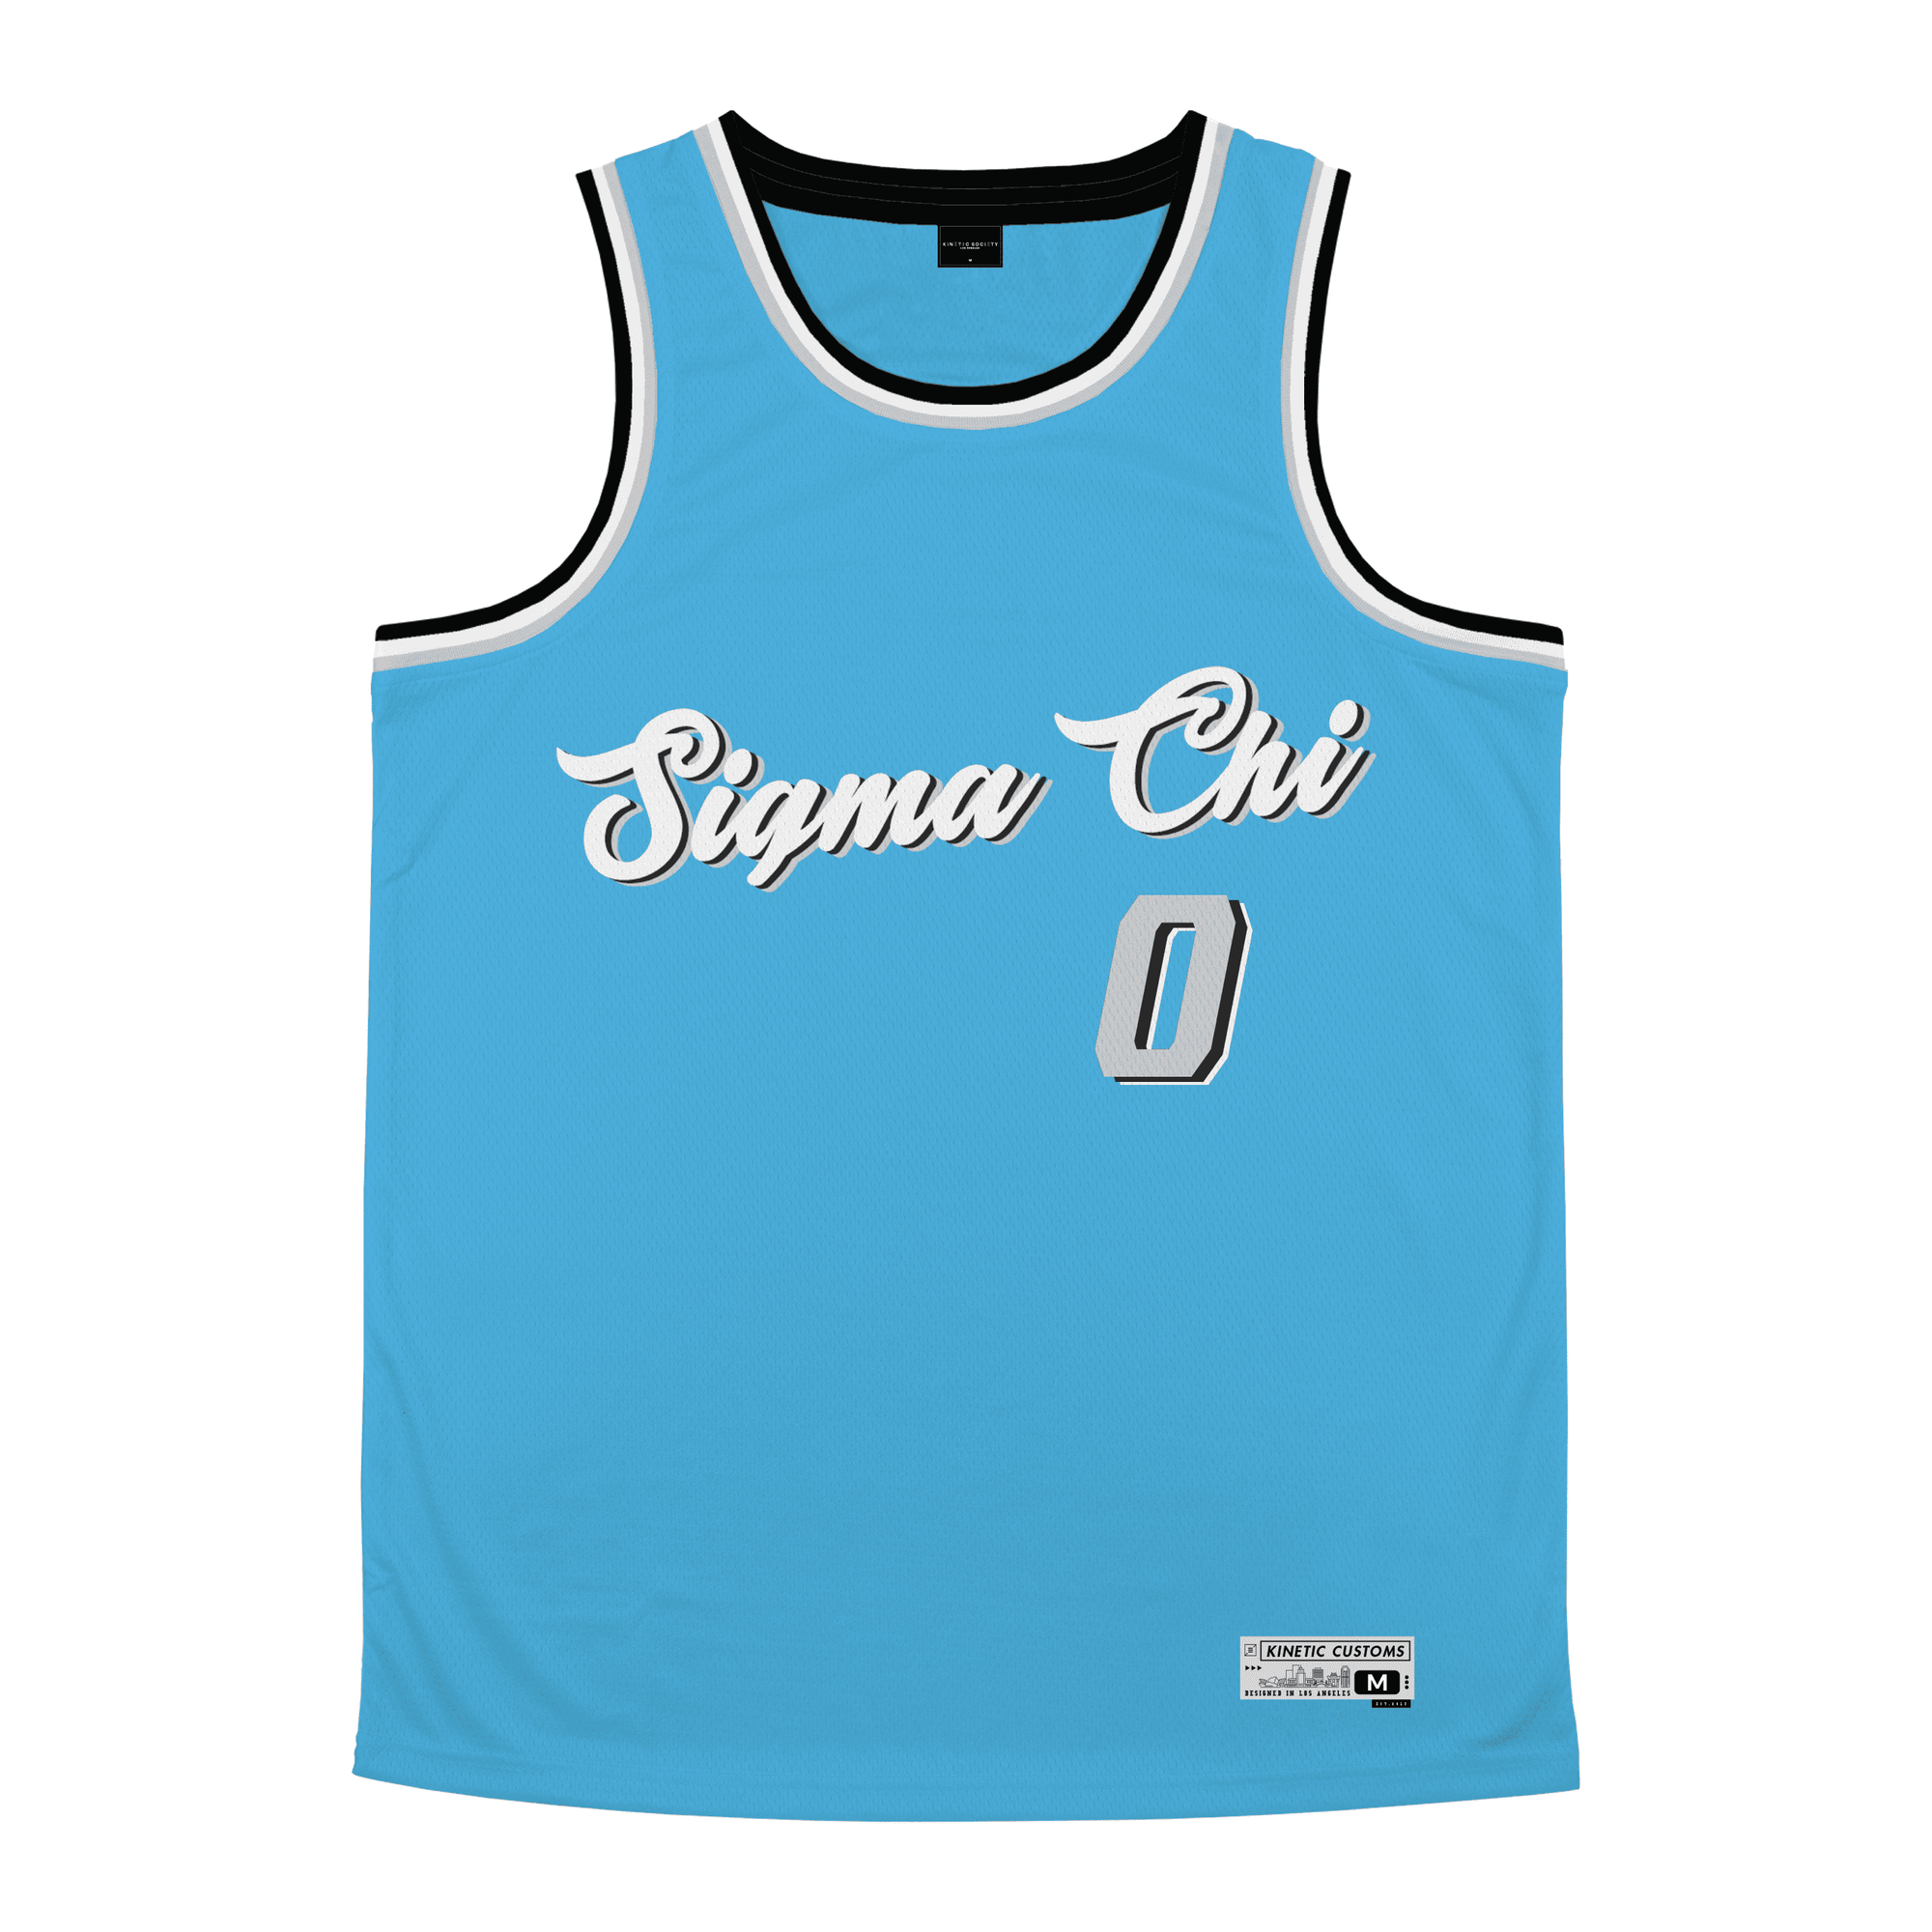 Sigma Chi - Pacific Mist Basketball Jersey